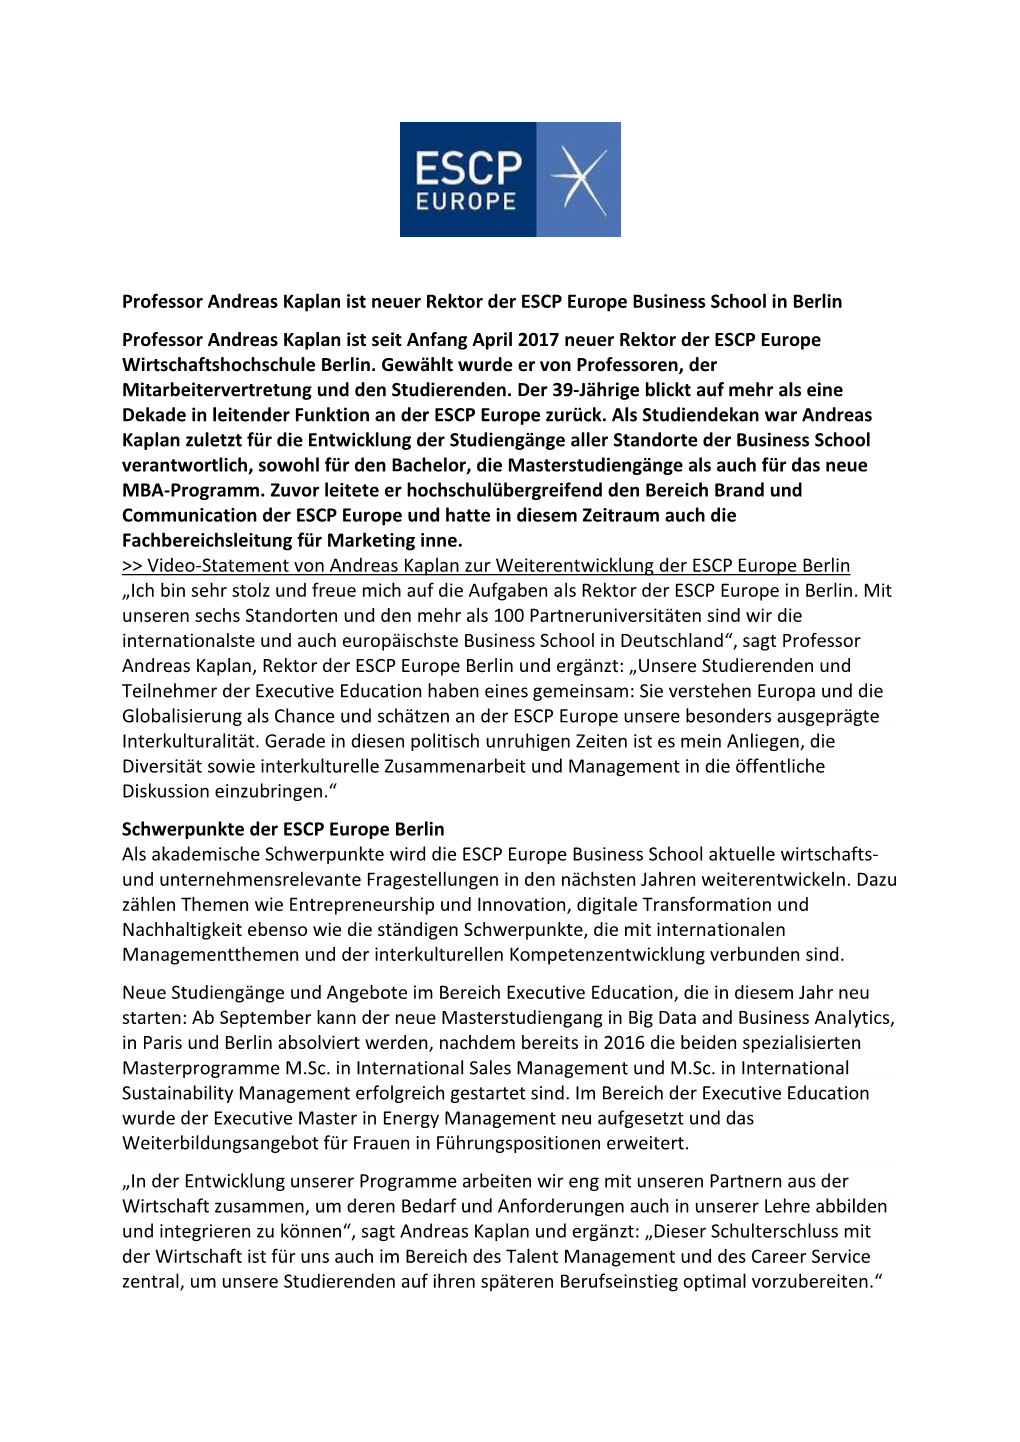 Professor Andreas Kaplan Ist Neuer Rektor Der ESCP Europe Business